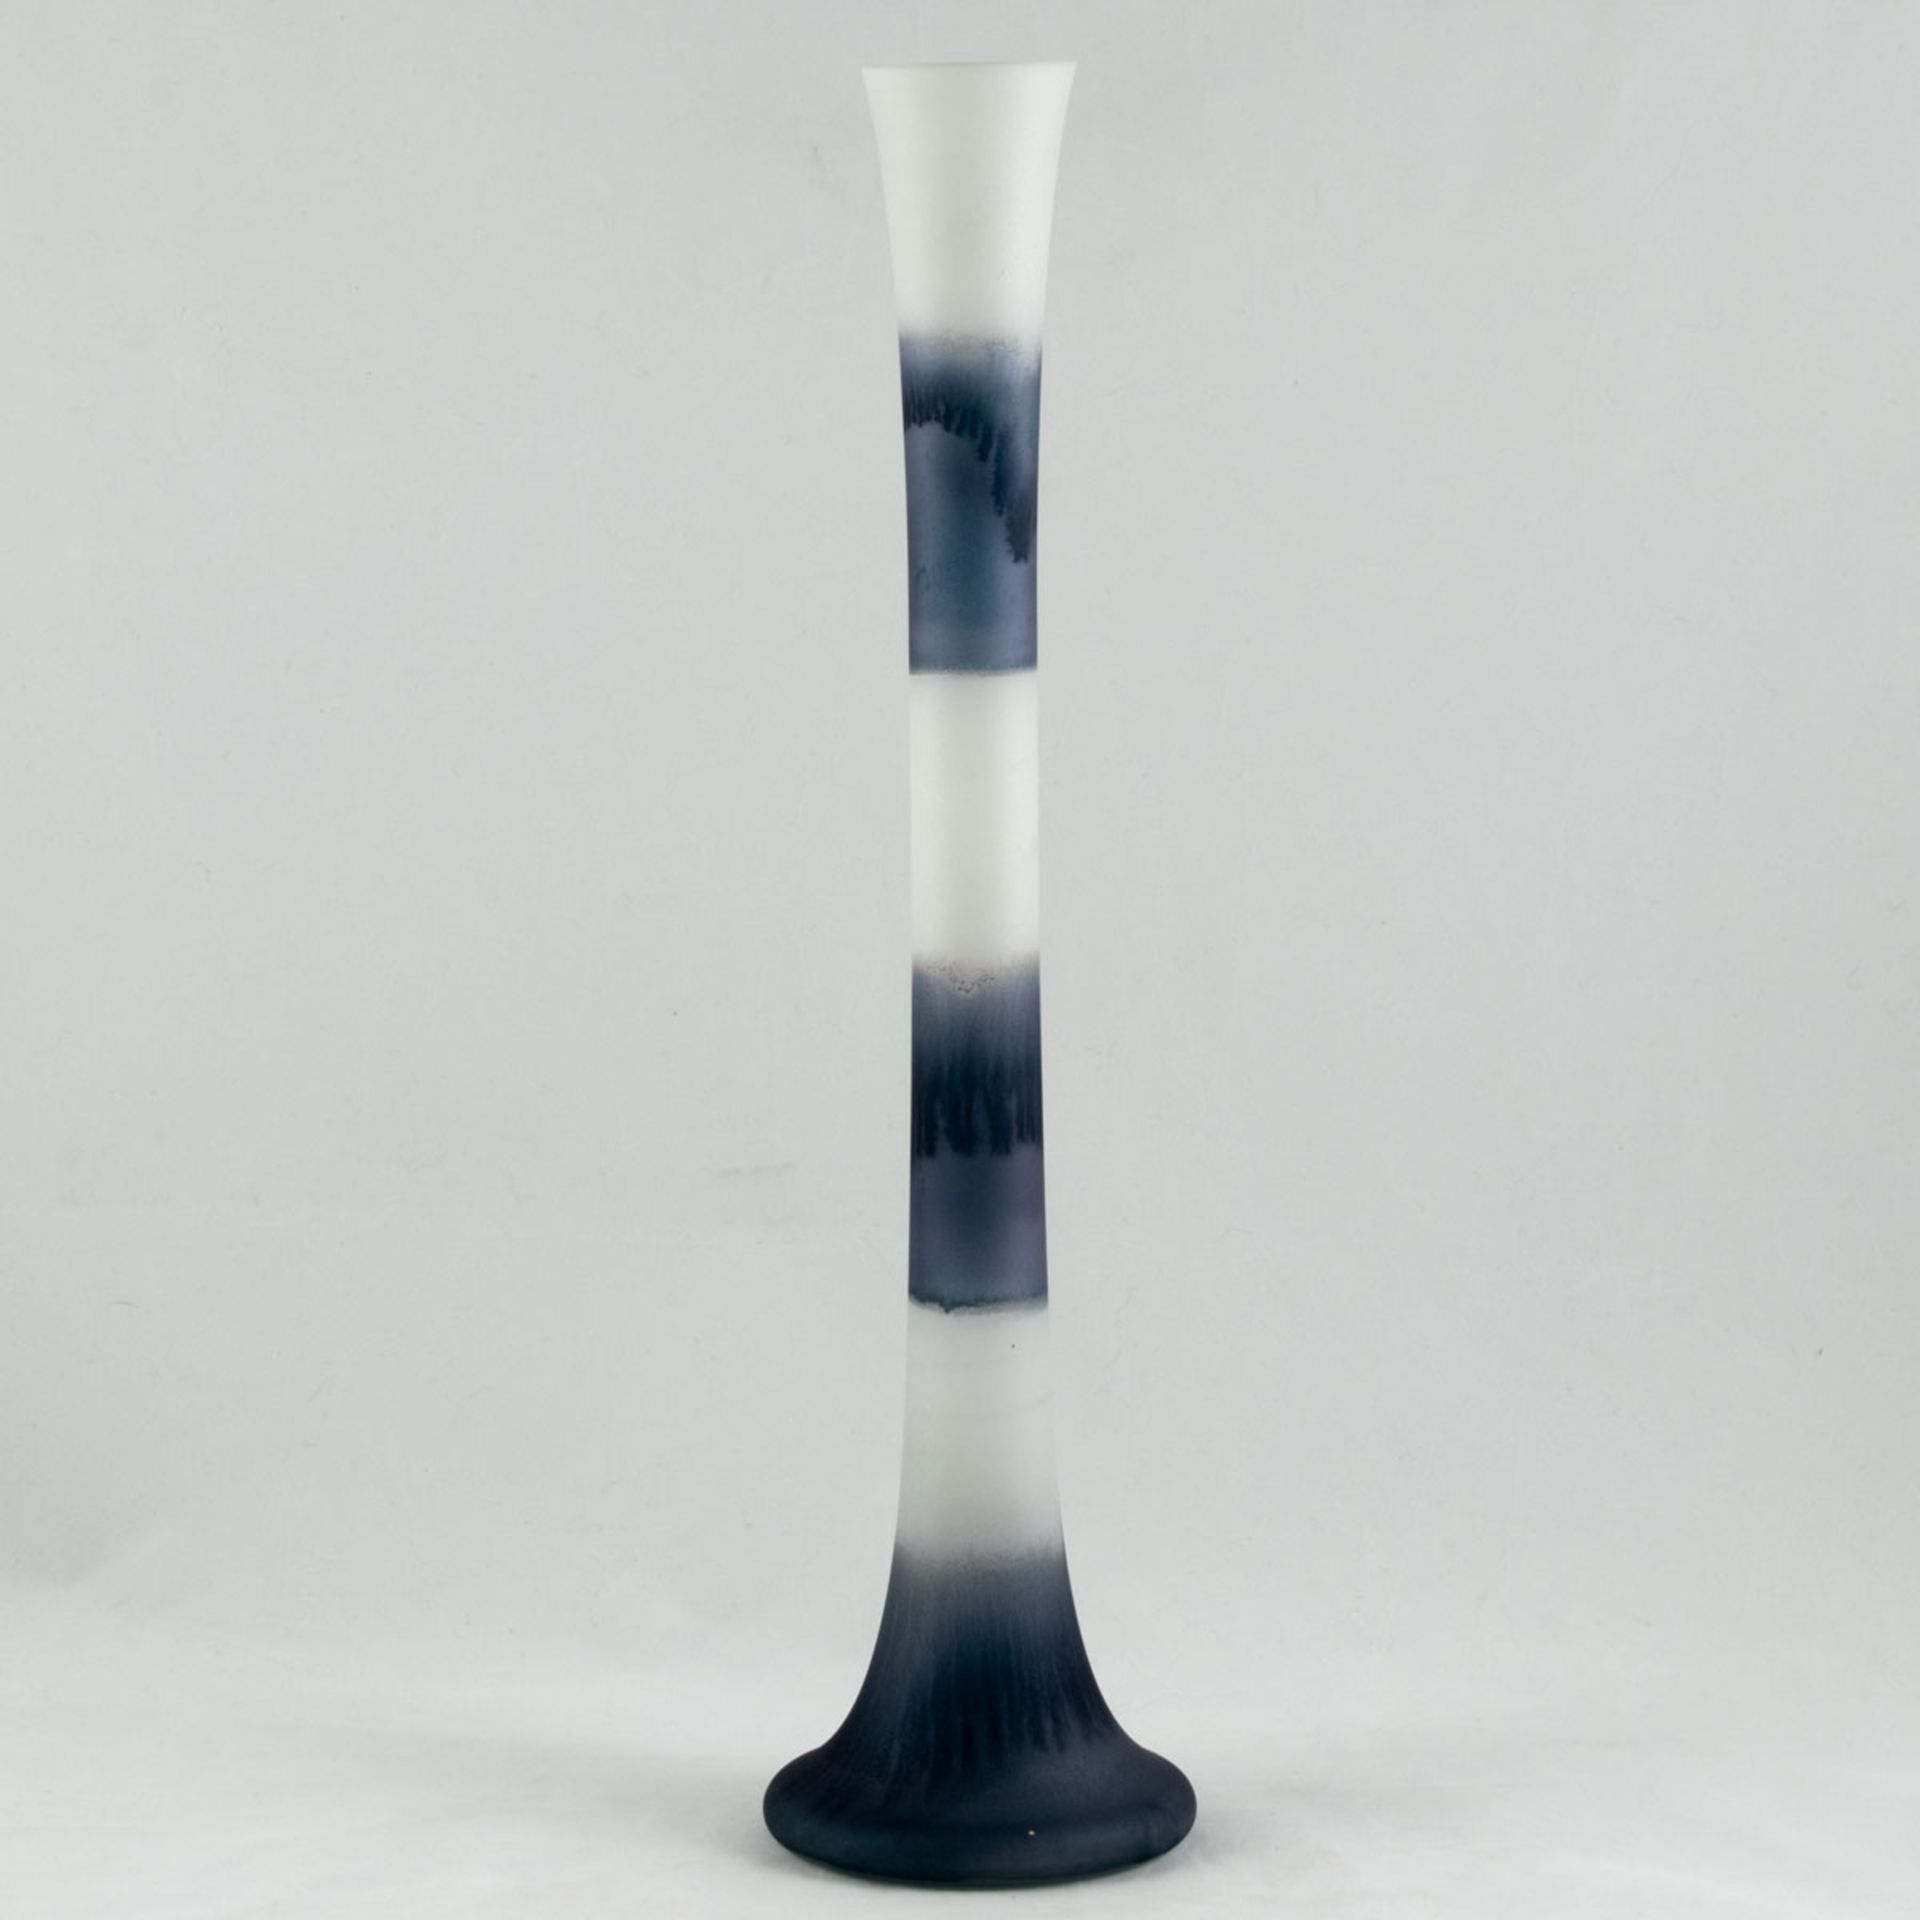 Hohe Stangenvase IRA Kristall, Zwiesel. Farbloses Glas, mit blauer Laufglasur. Oberfläche sa - Image 3 of 3